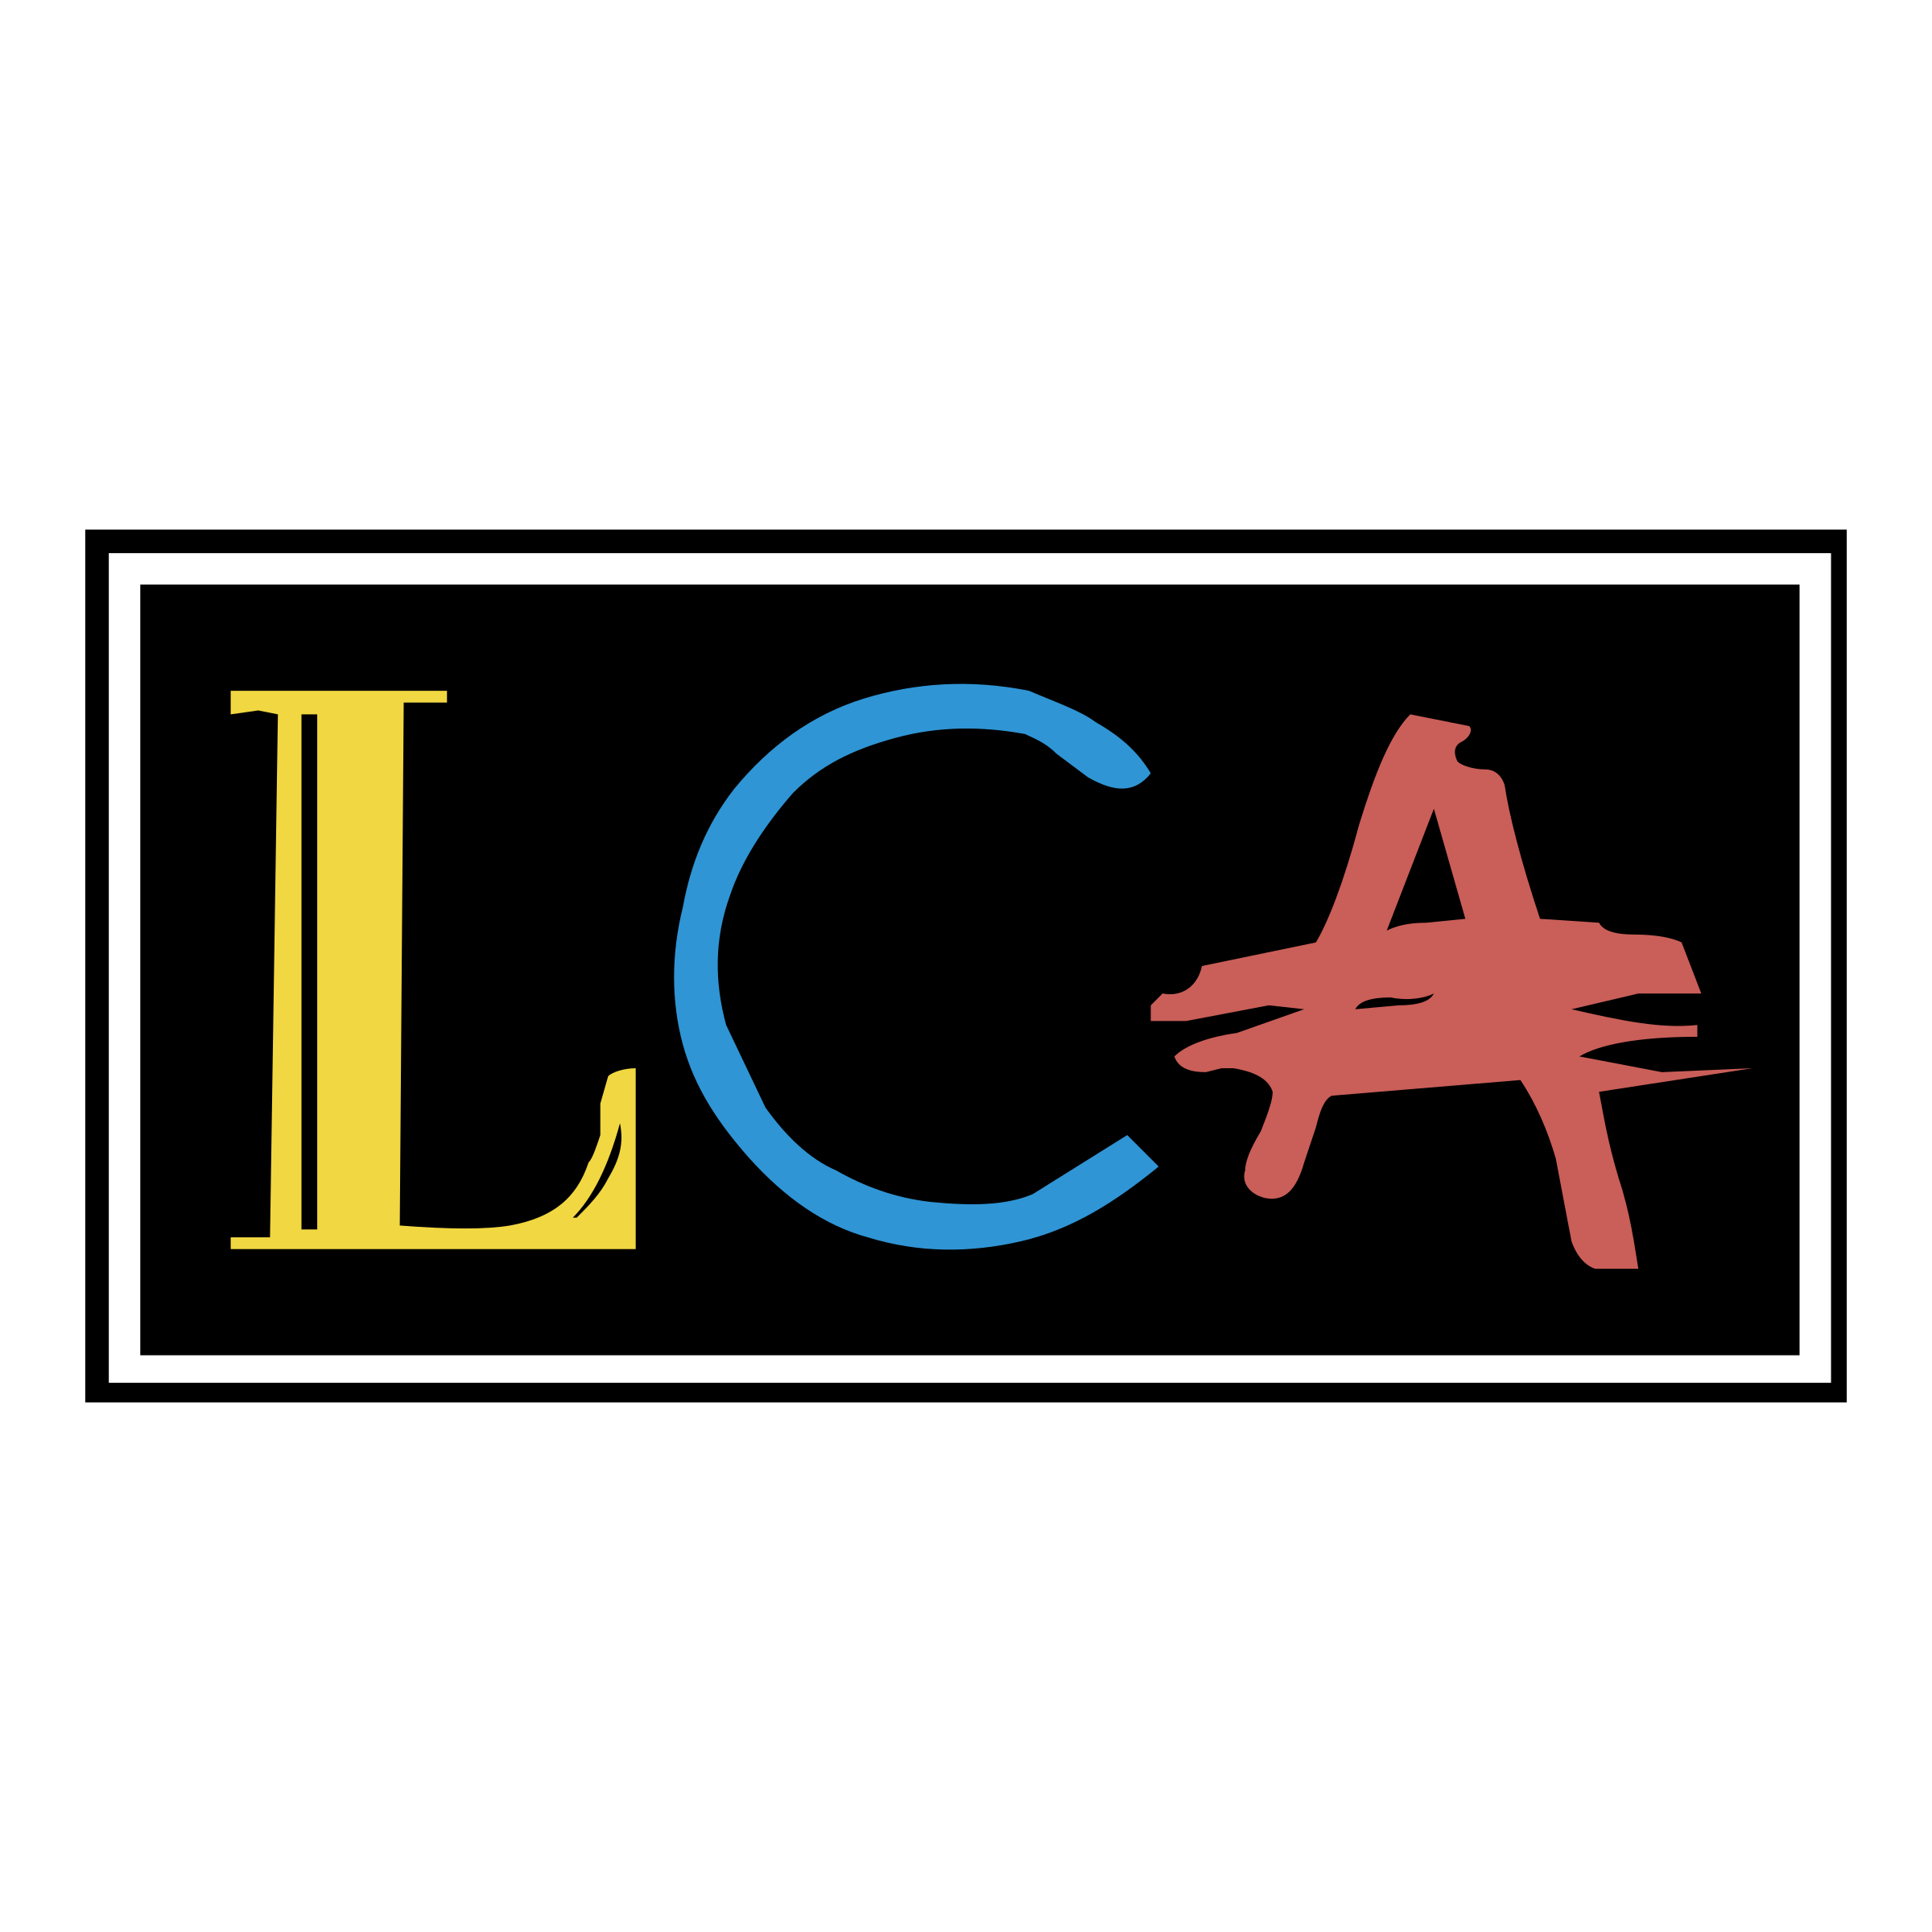 LCA Logo - LCA Logo PNG Transparent & SVG Vector